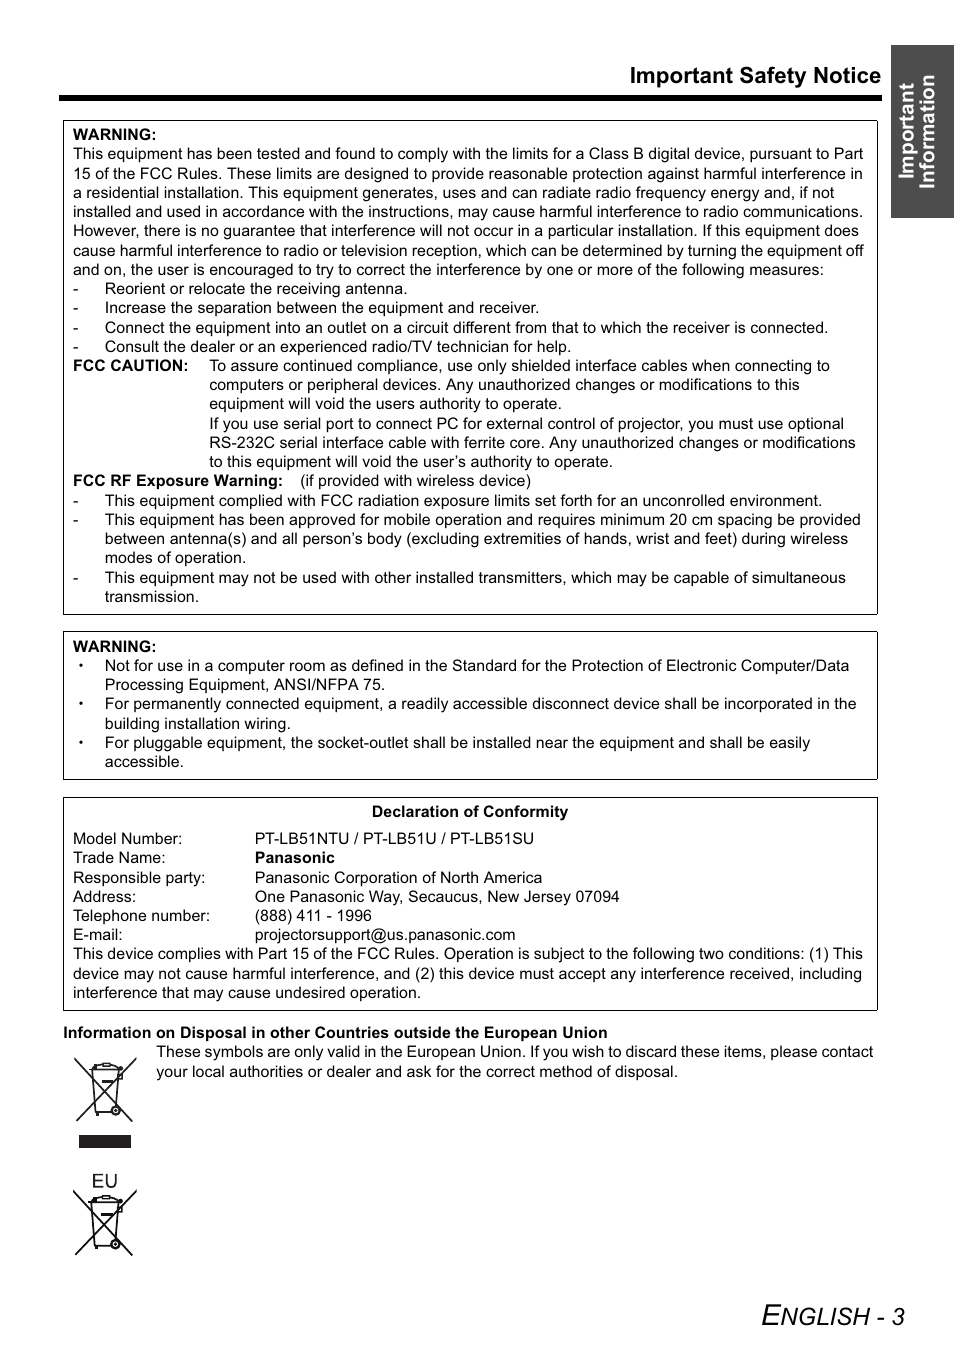 Nglish - 3, Important safety notice, Important information | Panasonic PT-LB51SU Manuel d'utilisation | Page 3 / 62